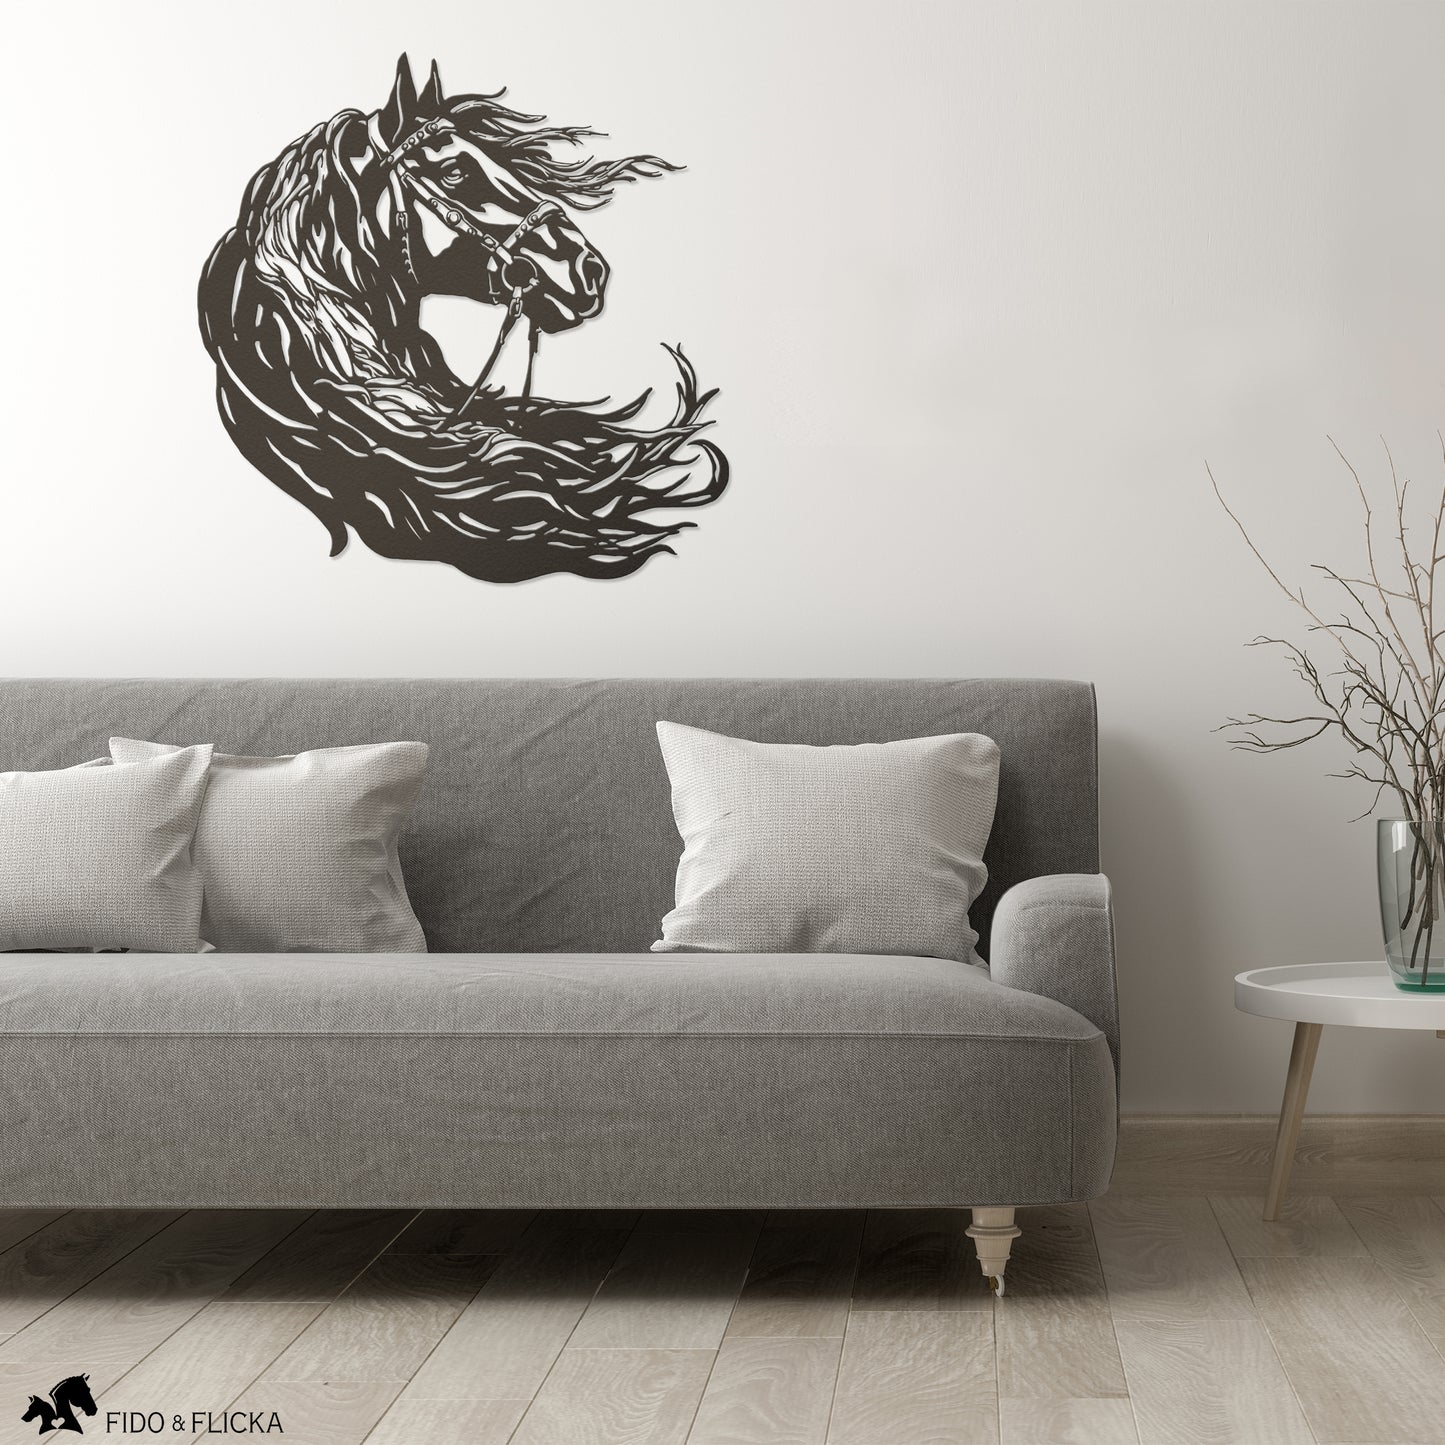 Friesian horse head metal wall art in living room